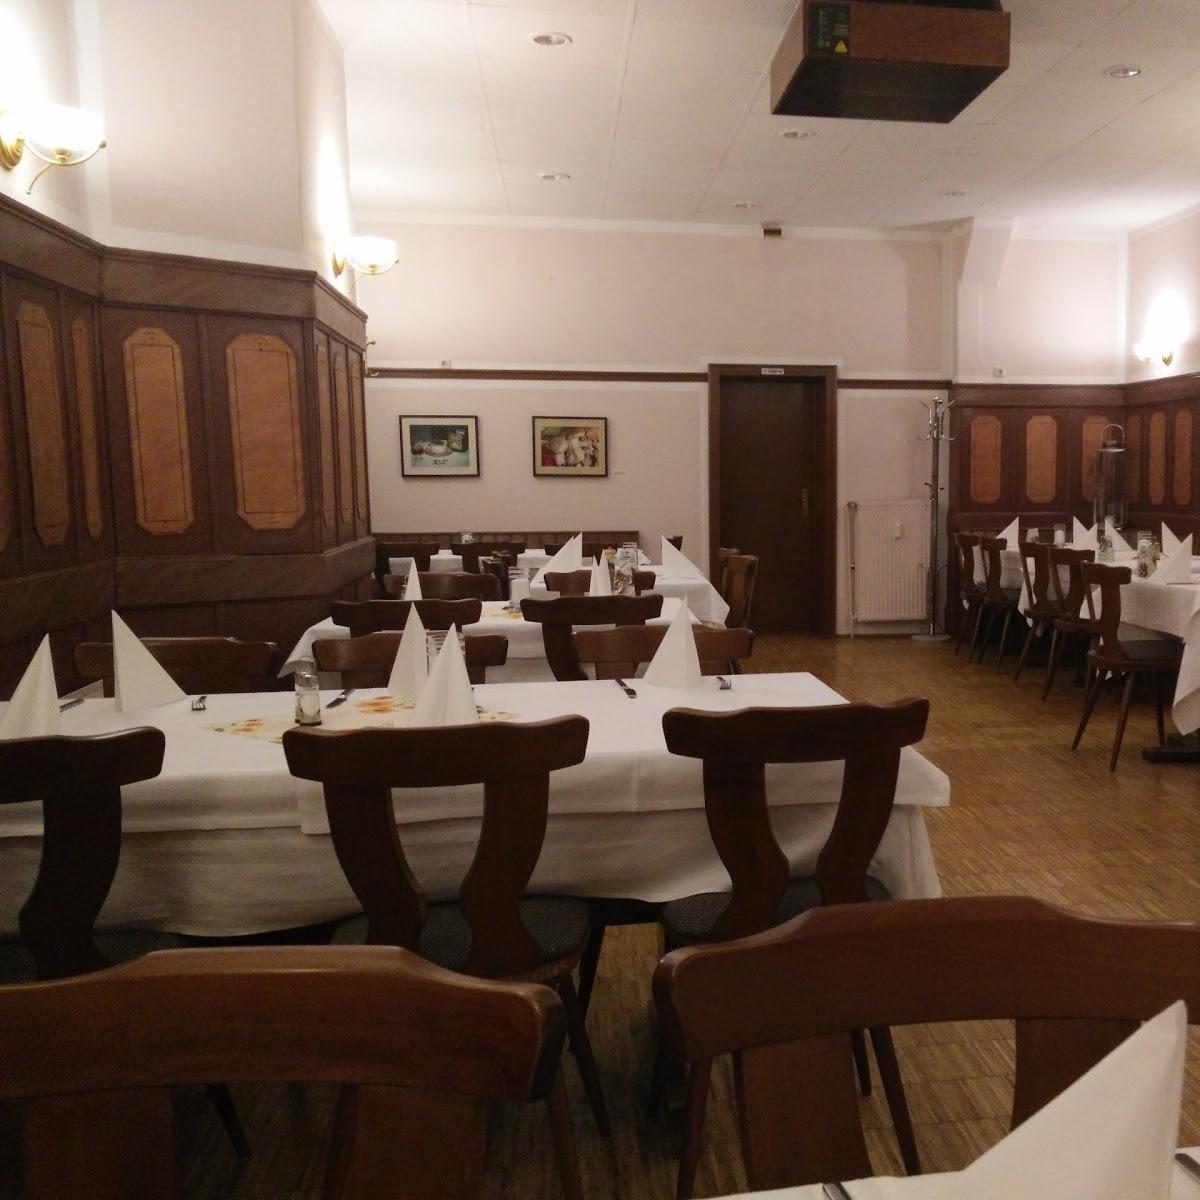 Restaurant "Zum Hopfengarten" in  Hanau